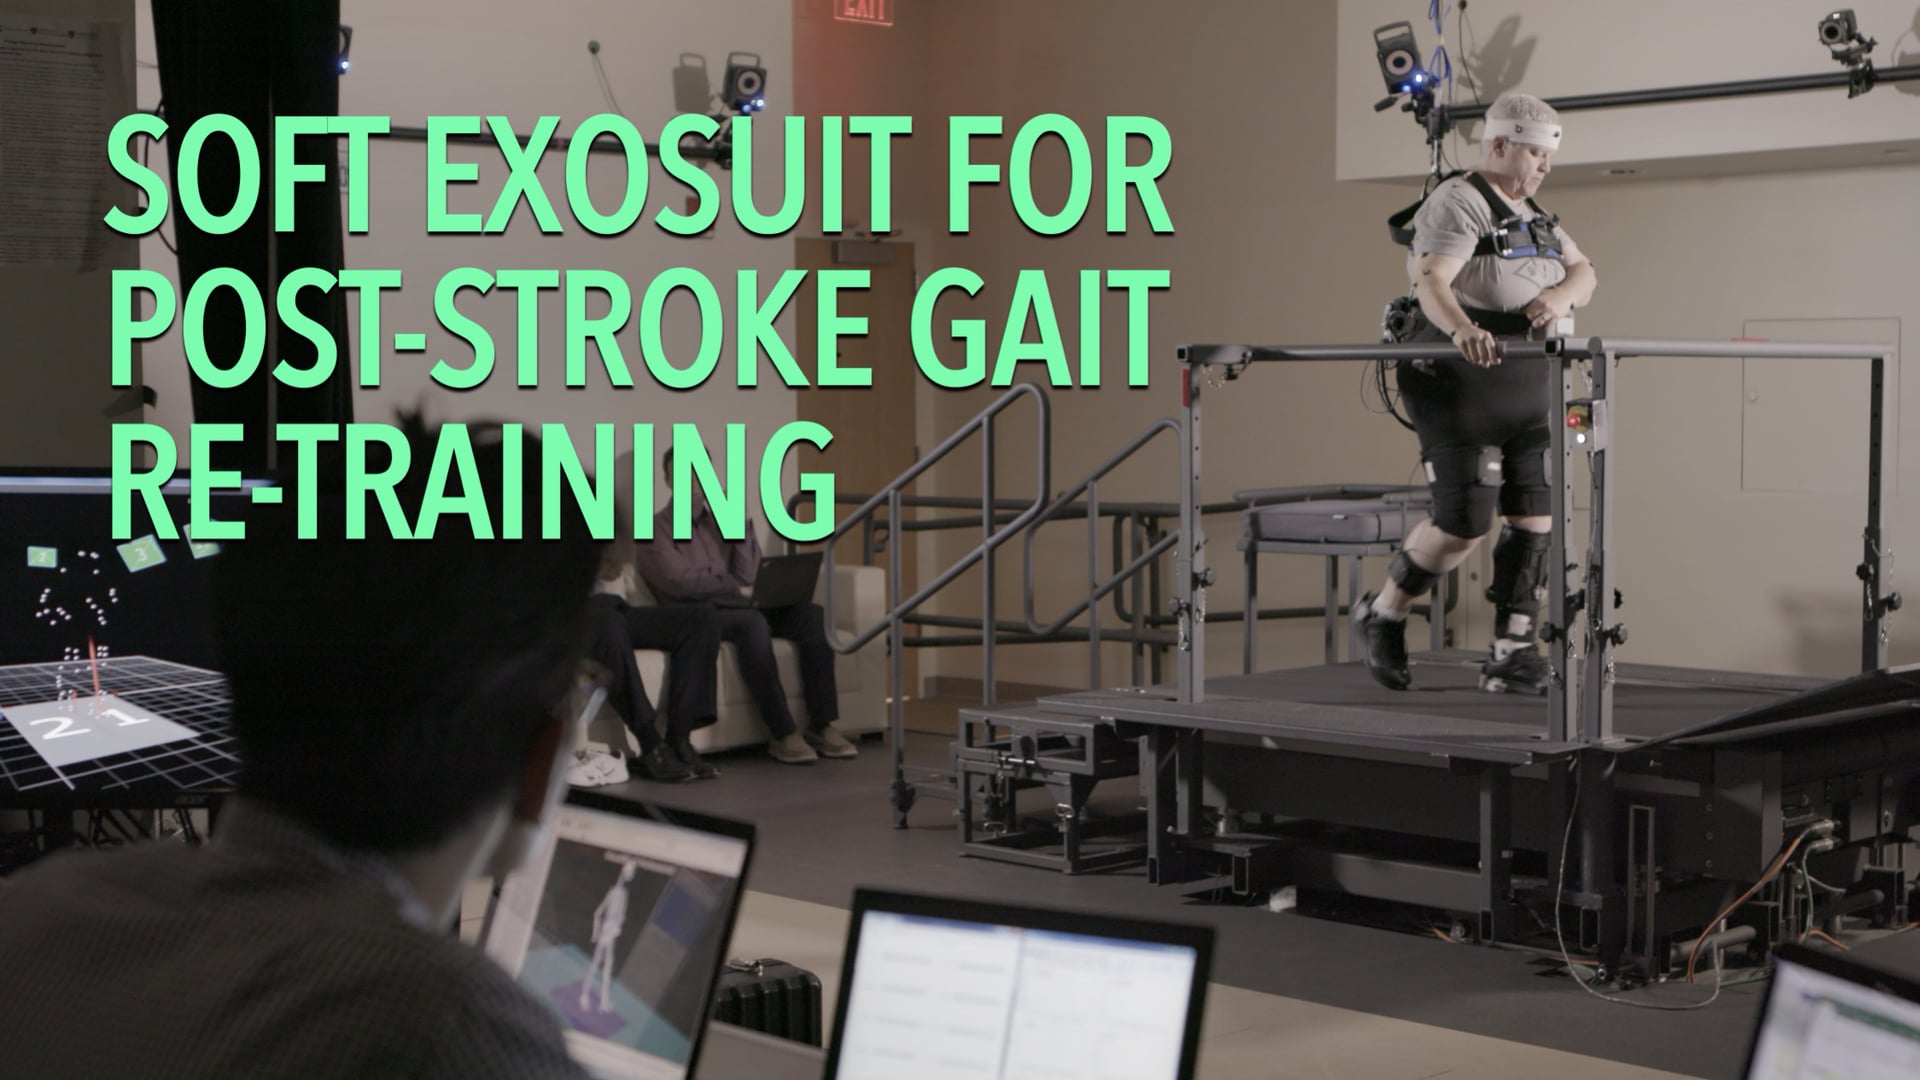 Soft Exosuit for Post-stroke Gait Re-training